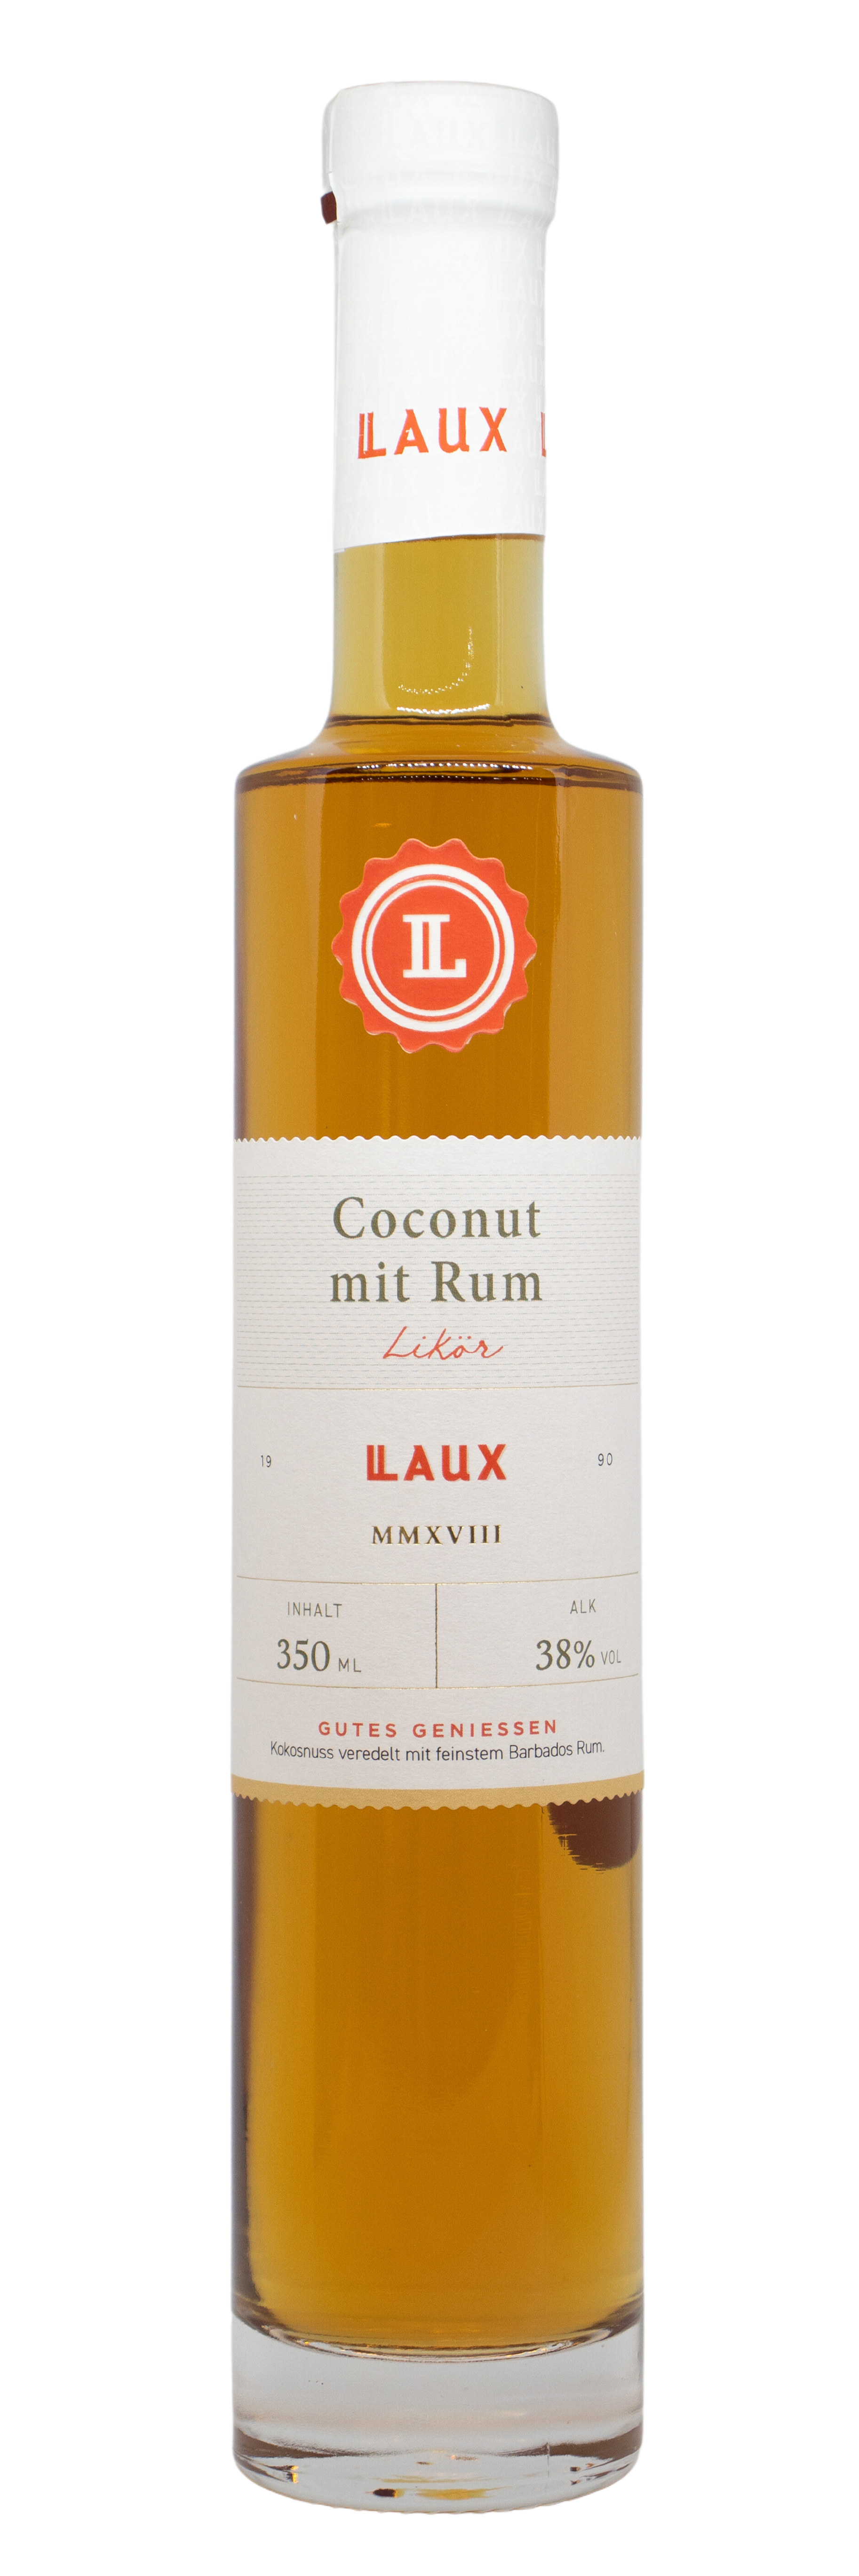 LAUX Coconut Likör in Flasche